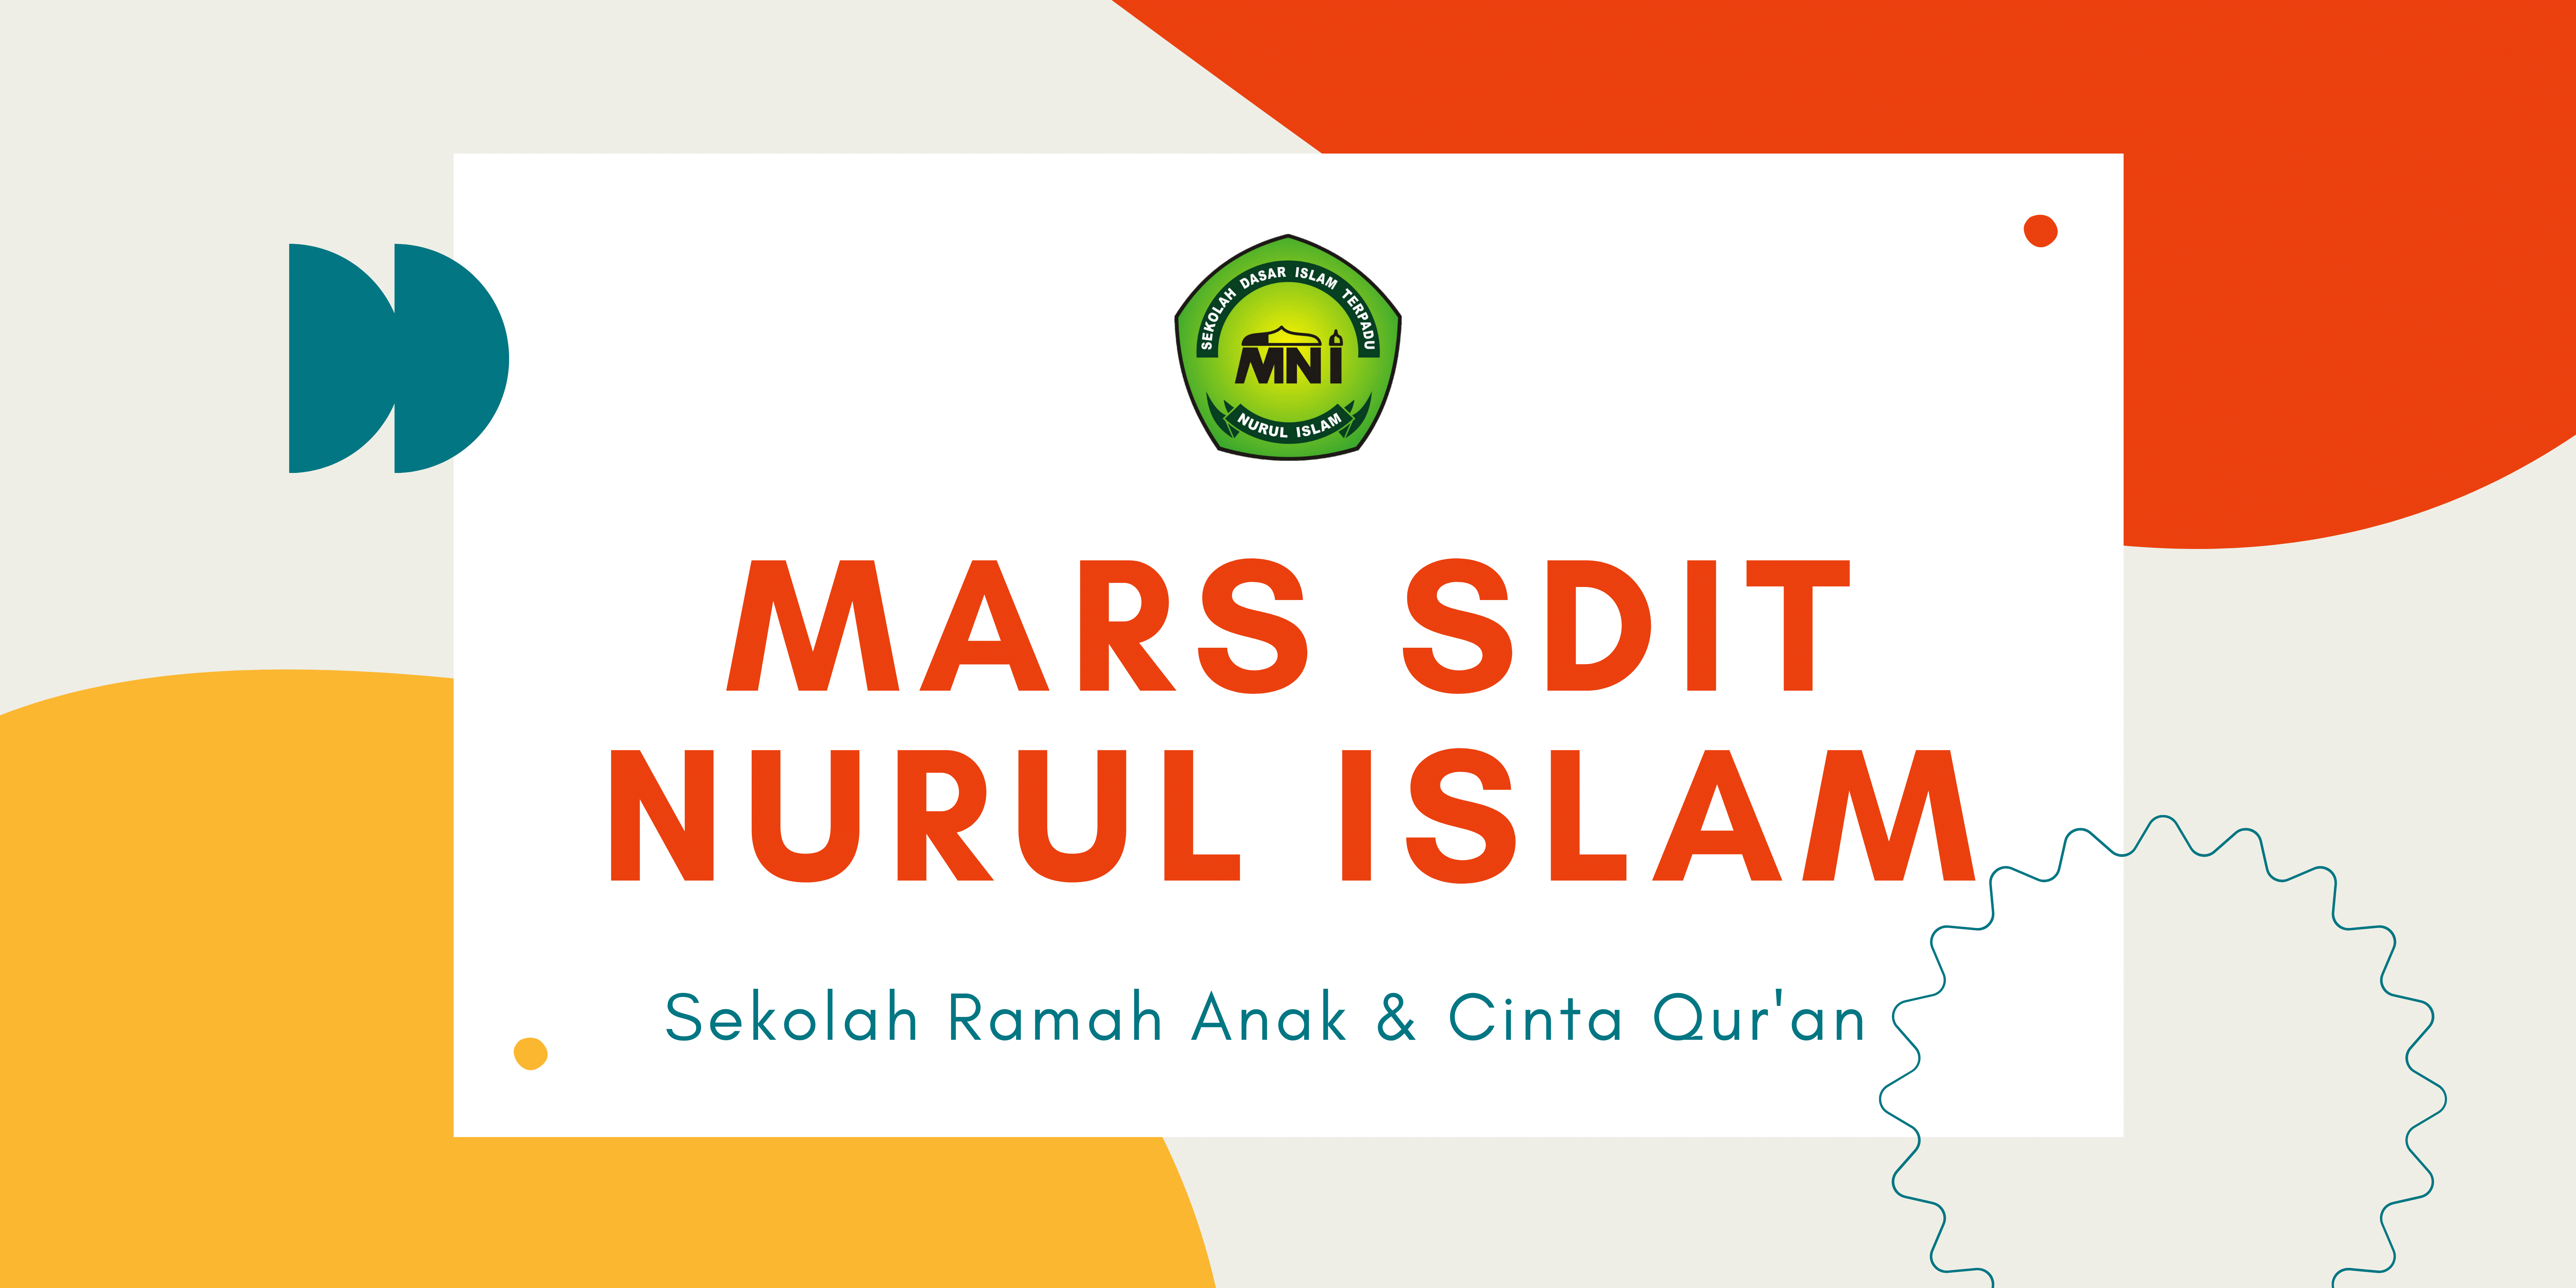 Mars SDIT Nurul Islam